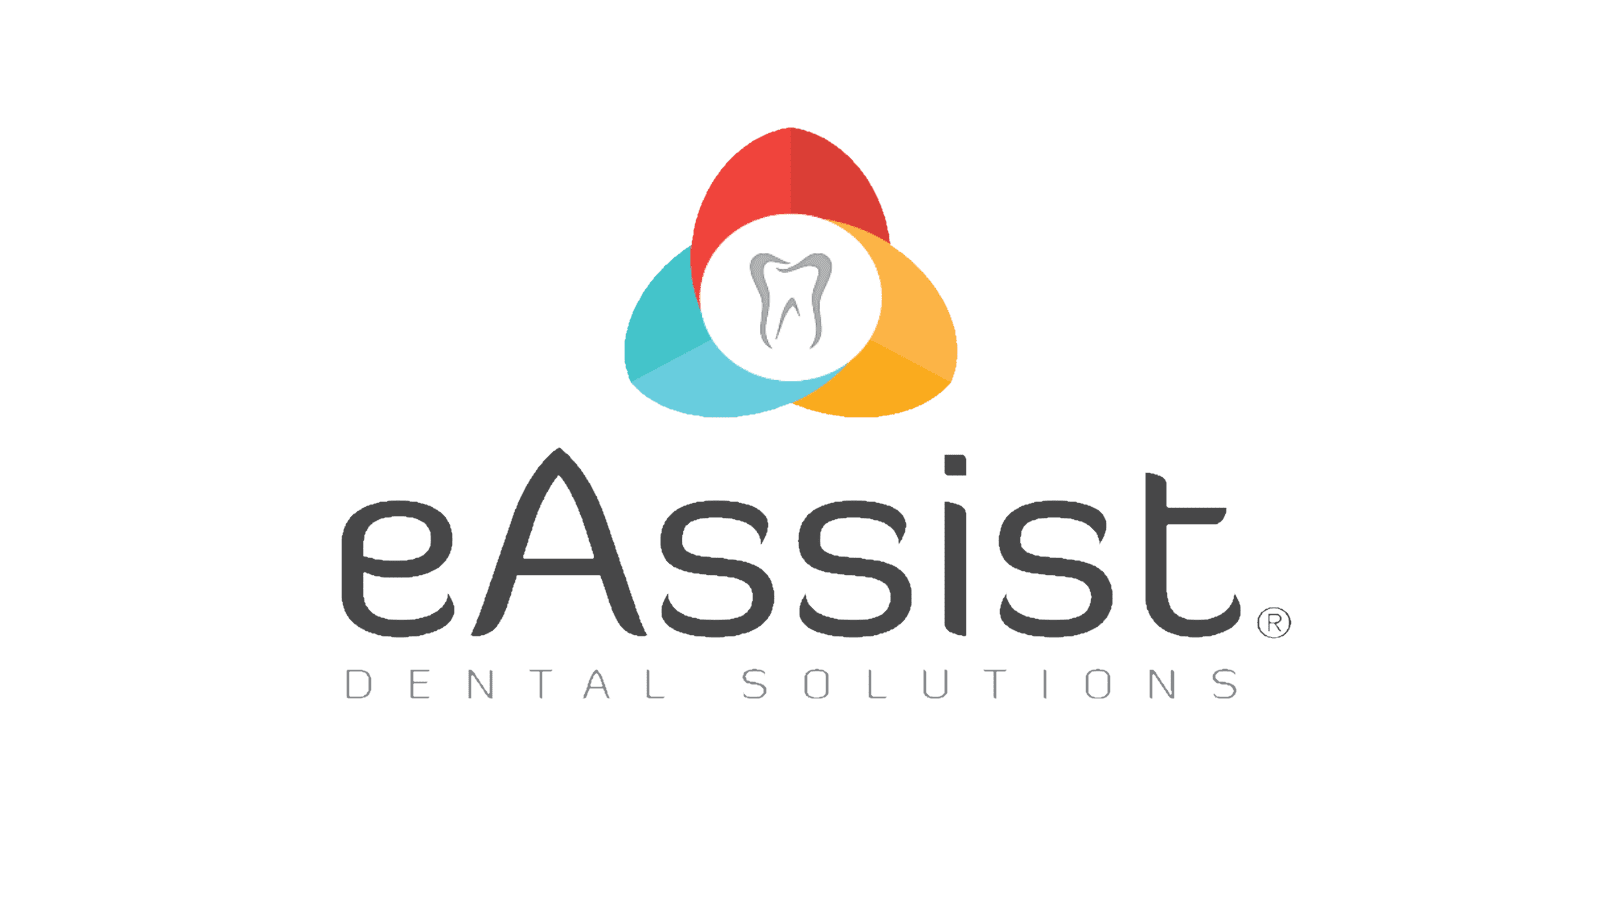 Eassist dental solutions logo